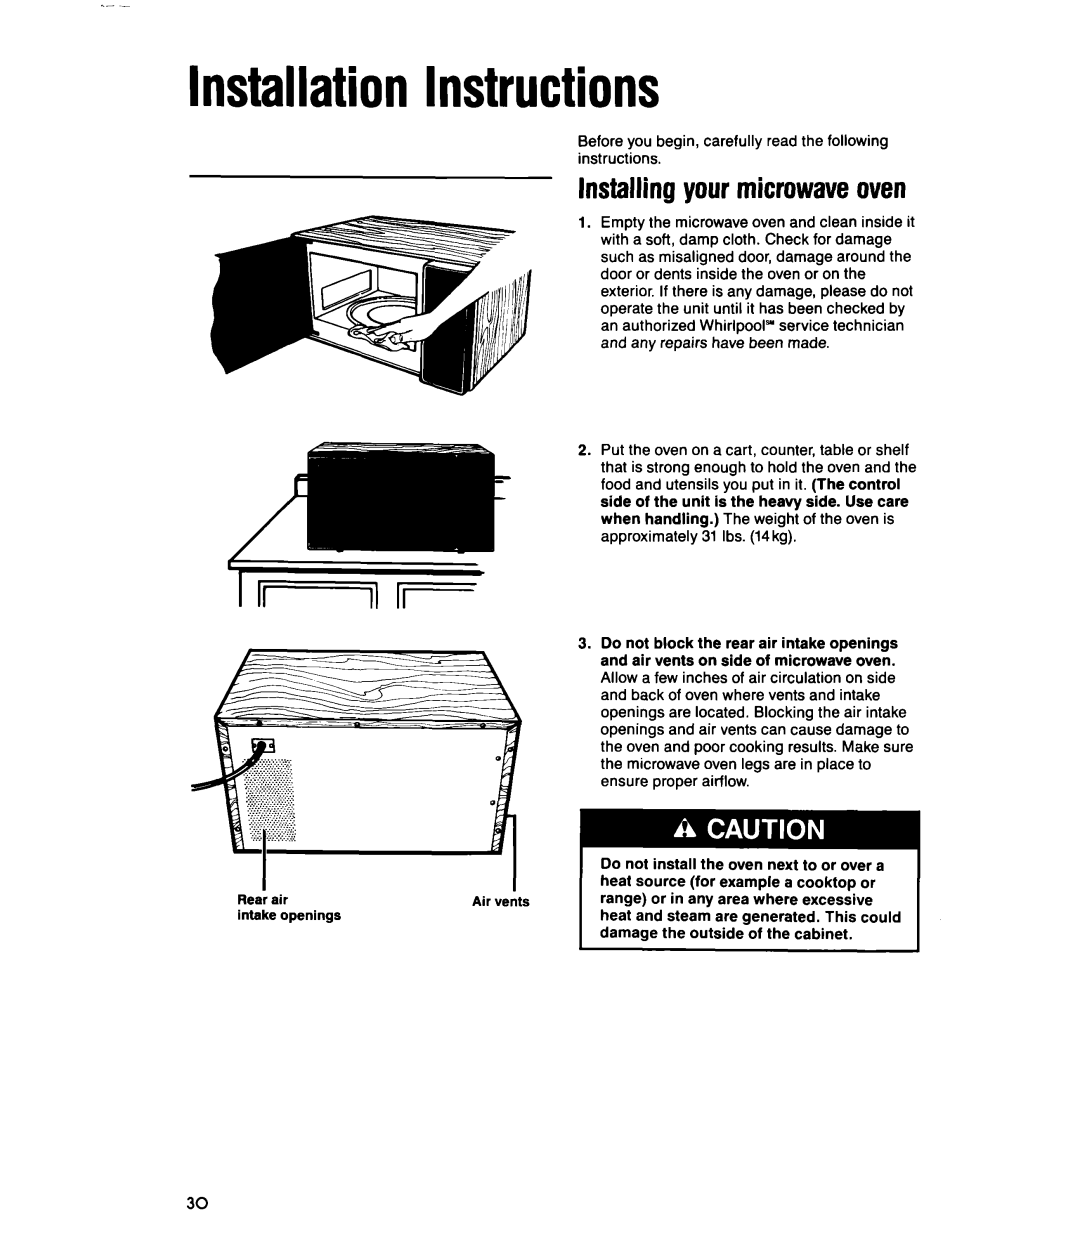 Whirlpool MTZ080XY user manual InstallationInstructions, Installing your microwaveoven 